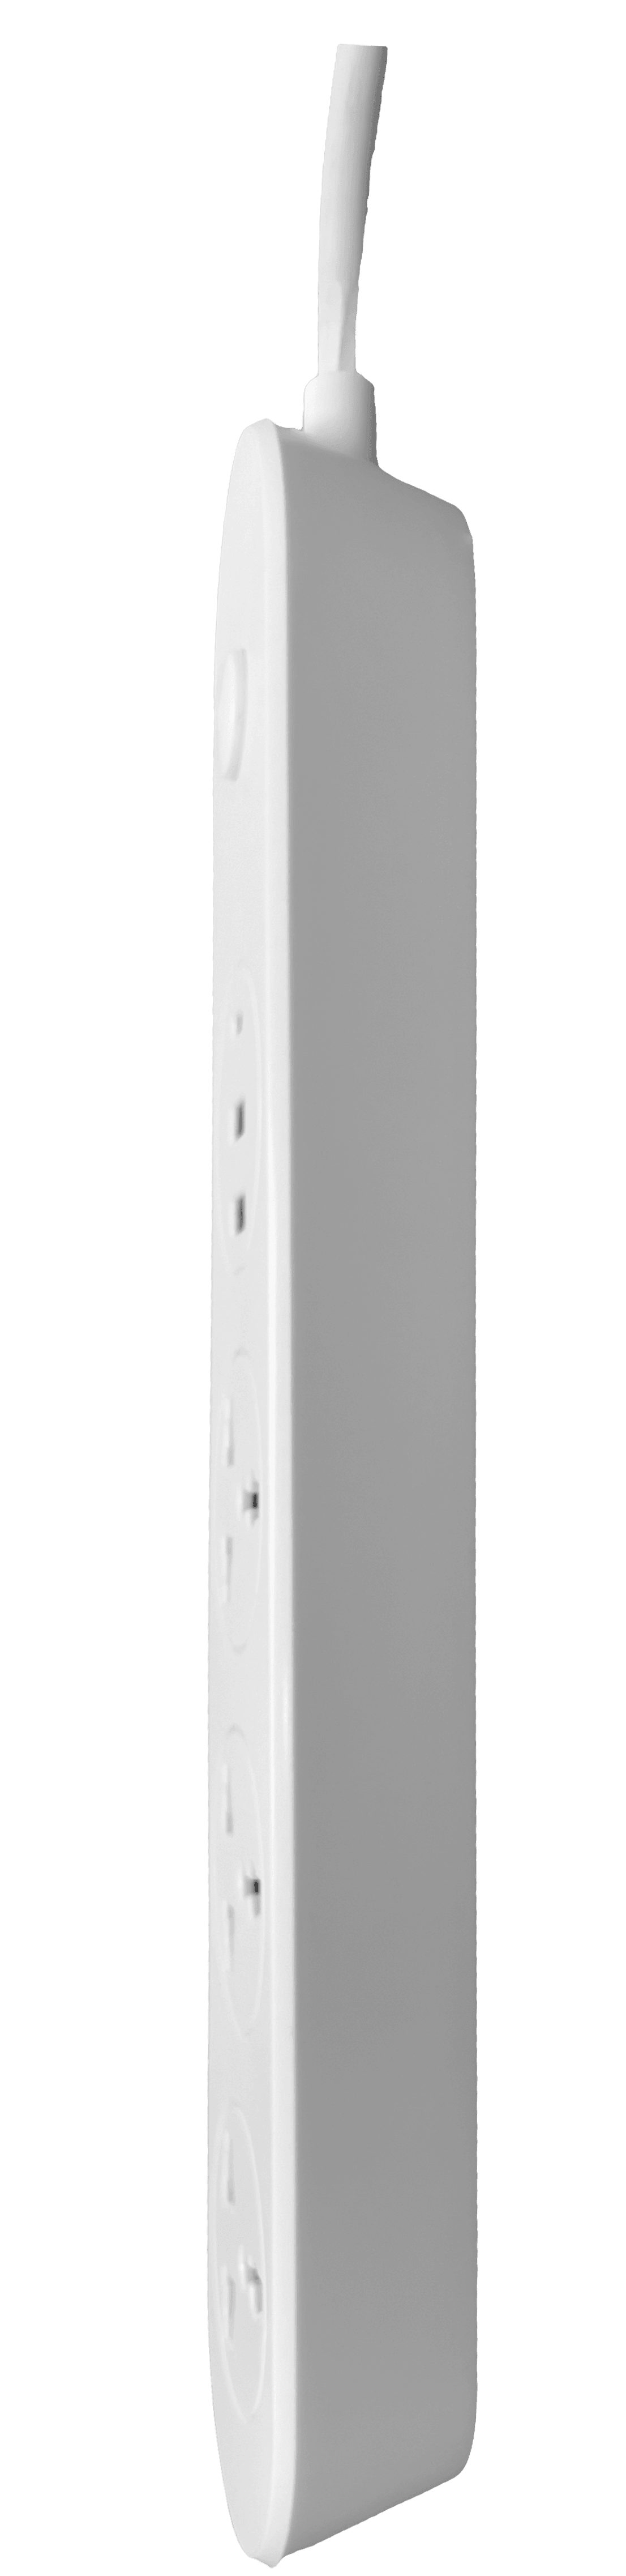 BAREEQ Lighting - بريق للاضاءة - اكسسوارات - مشترك 2 متر + USB